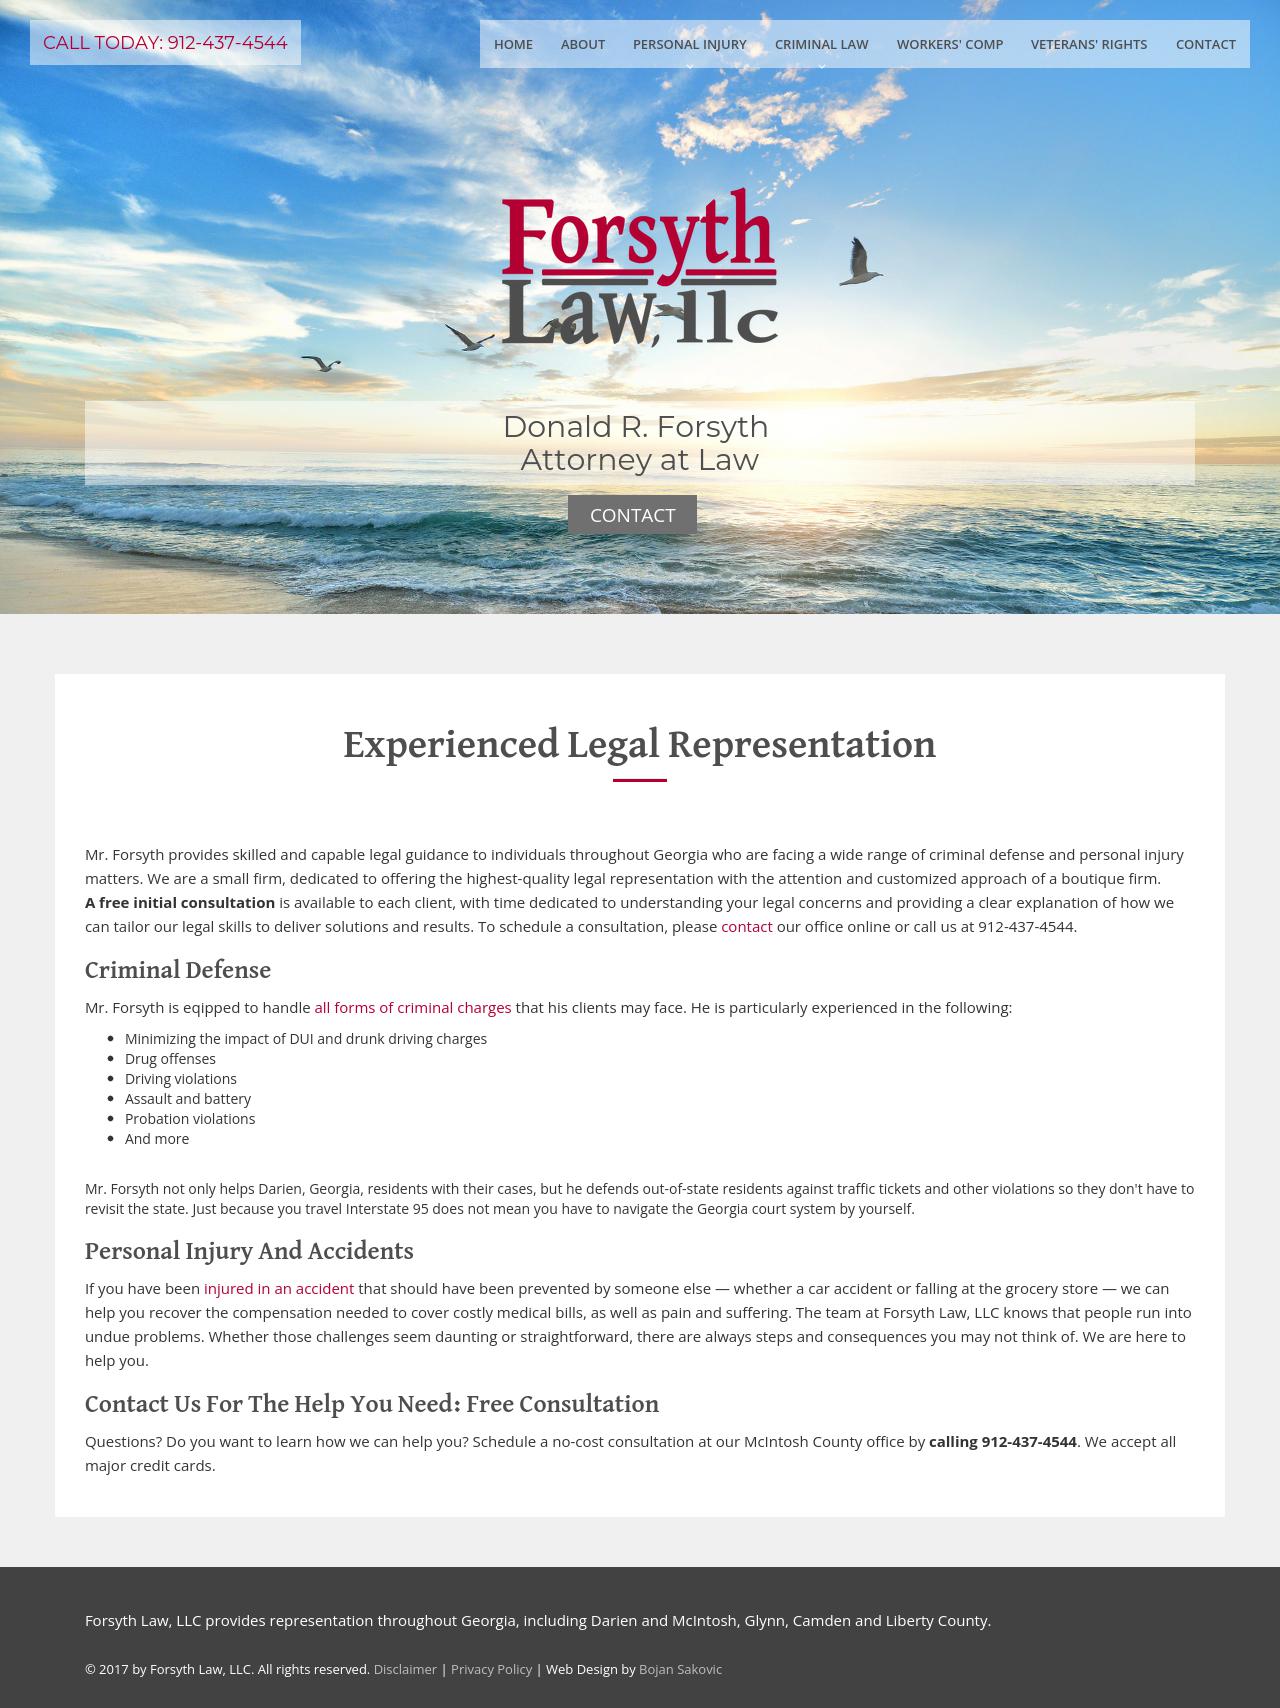 Forsyth and Tucakovic Law Group, LLC - Darien GA Lawyers